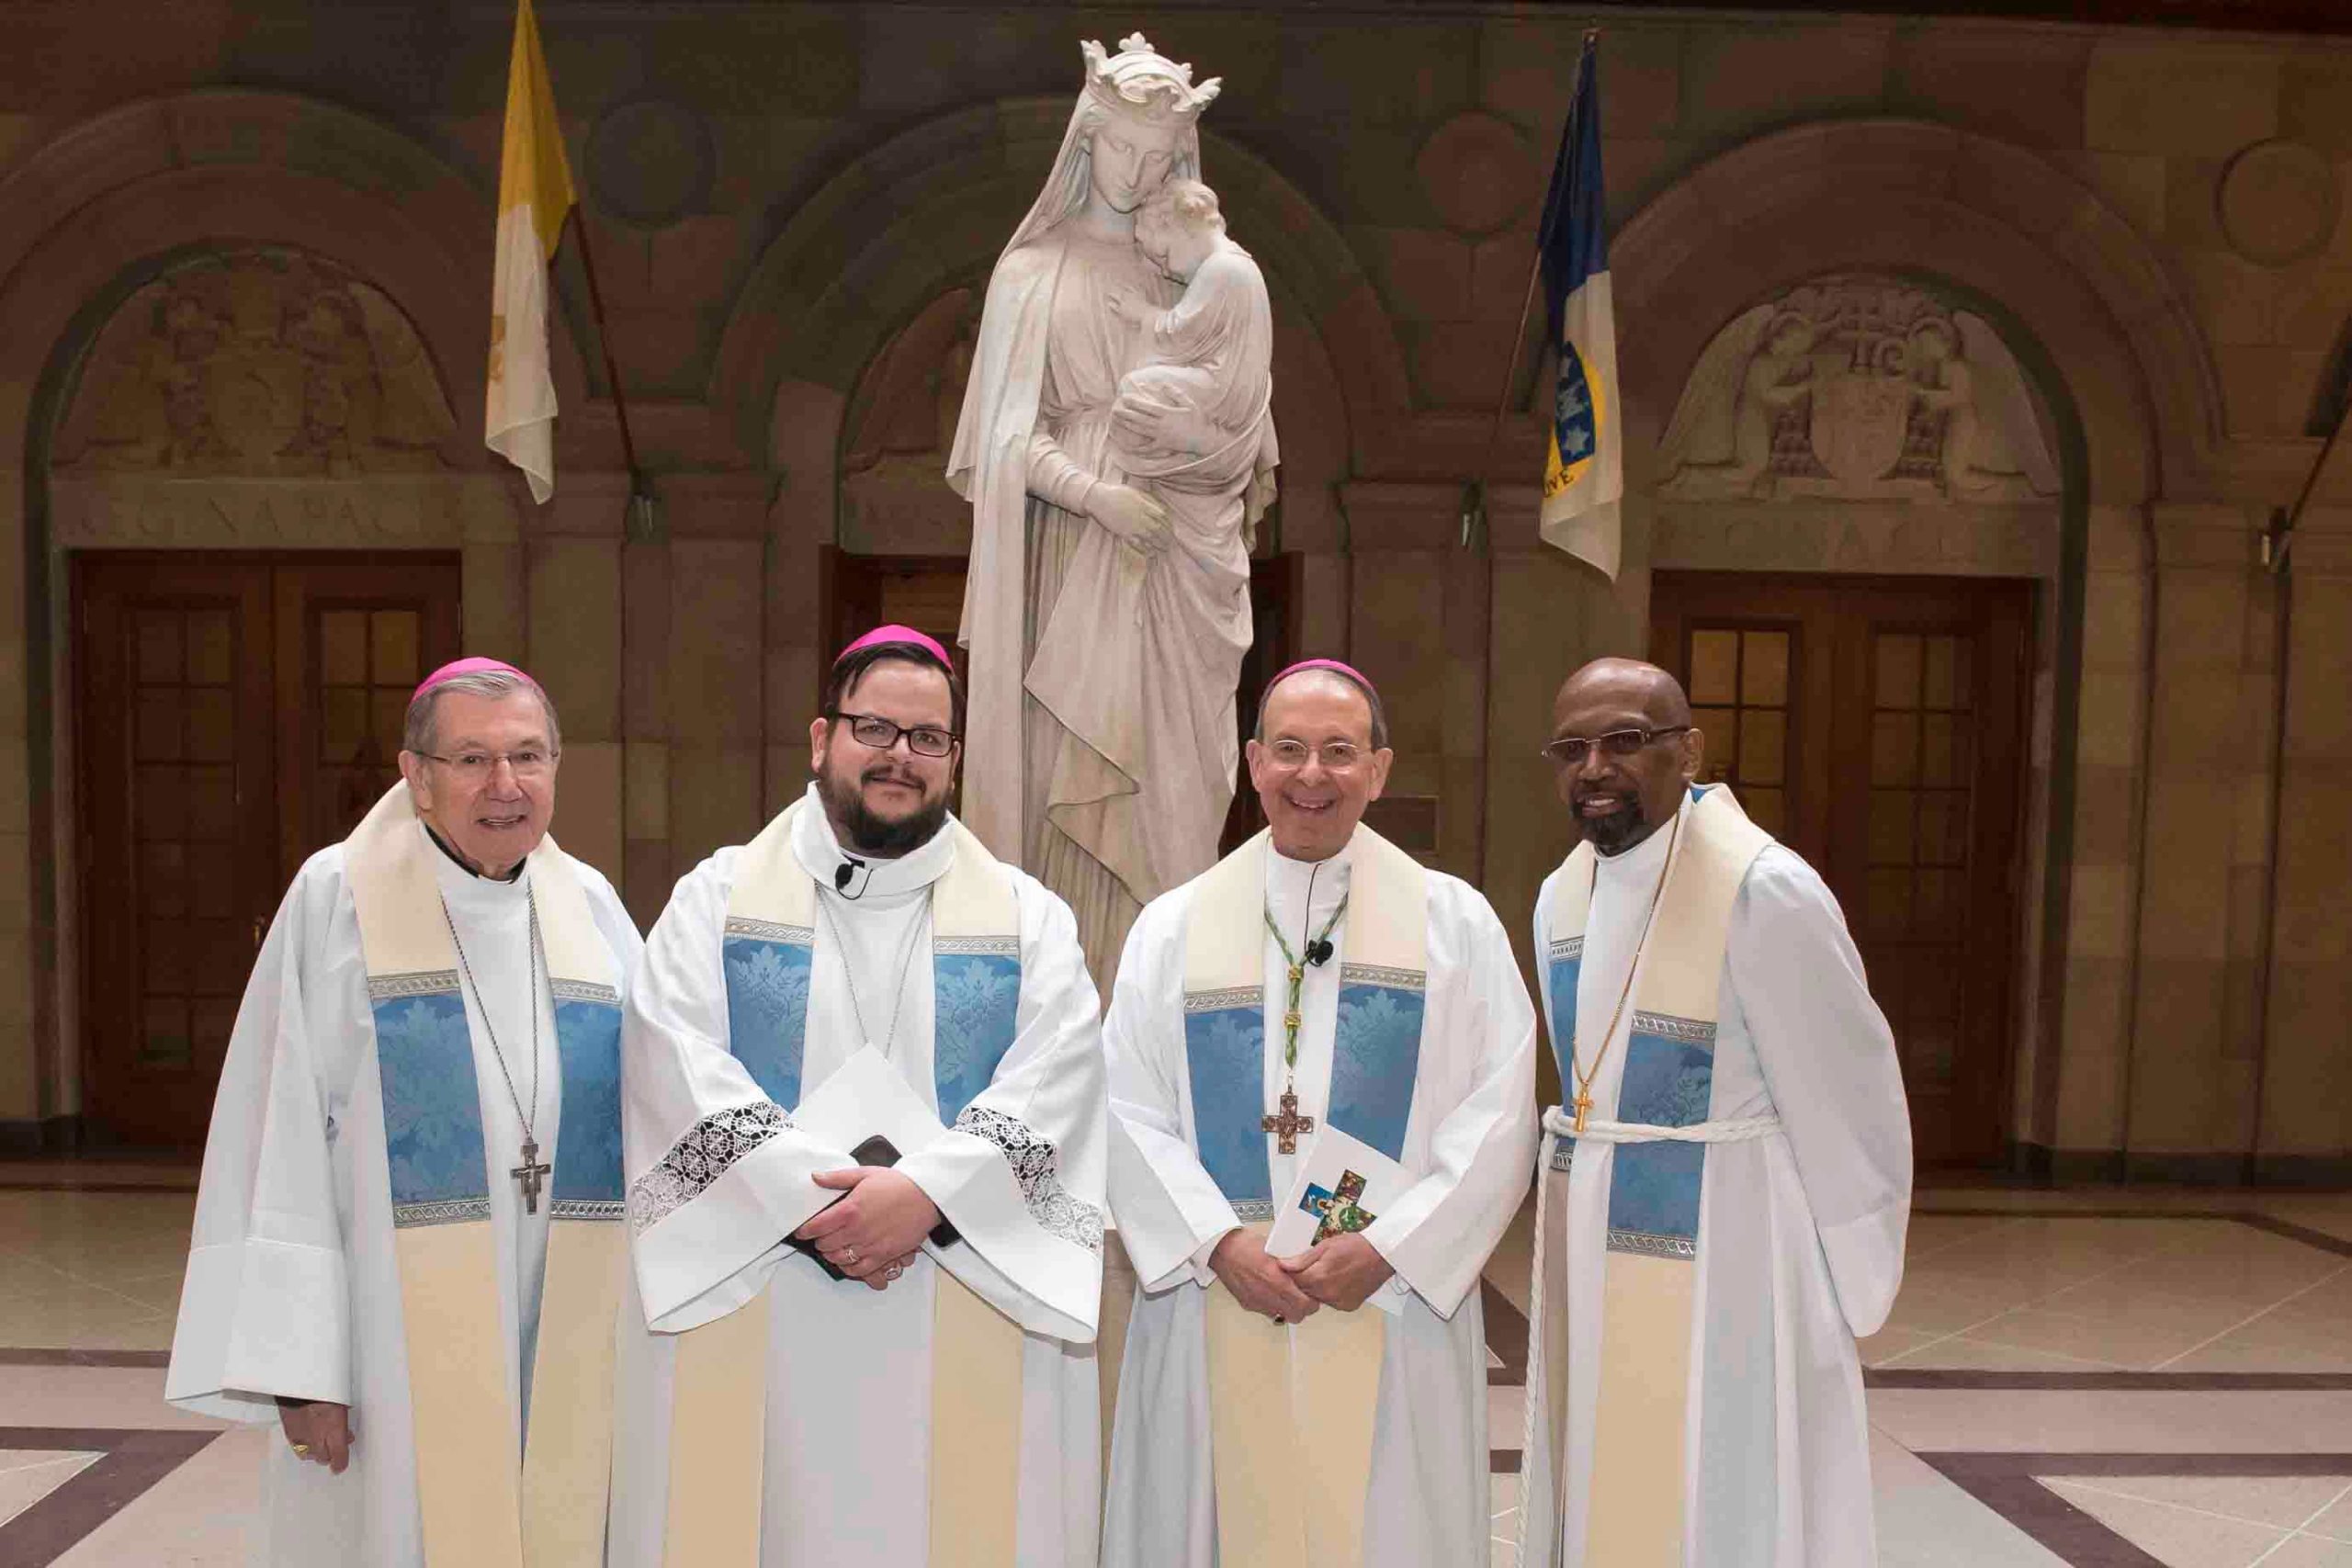 Catholics, Lutherans unite in prayer at St. Mary’s Seminary and University